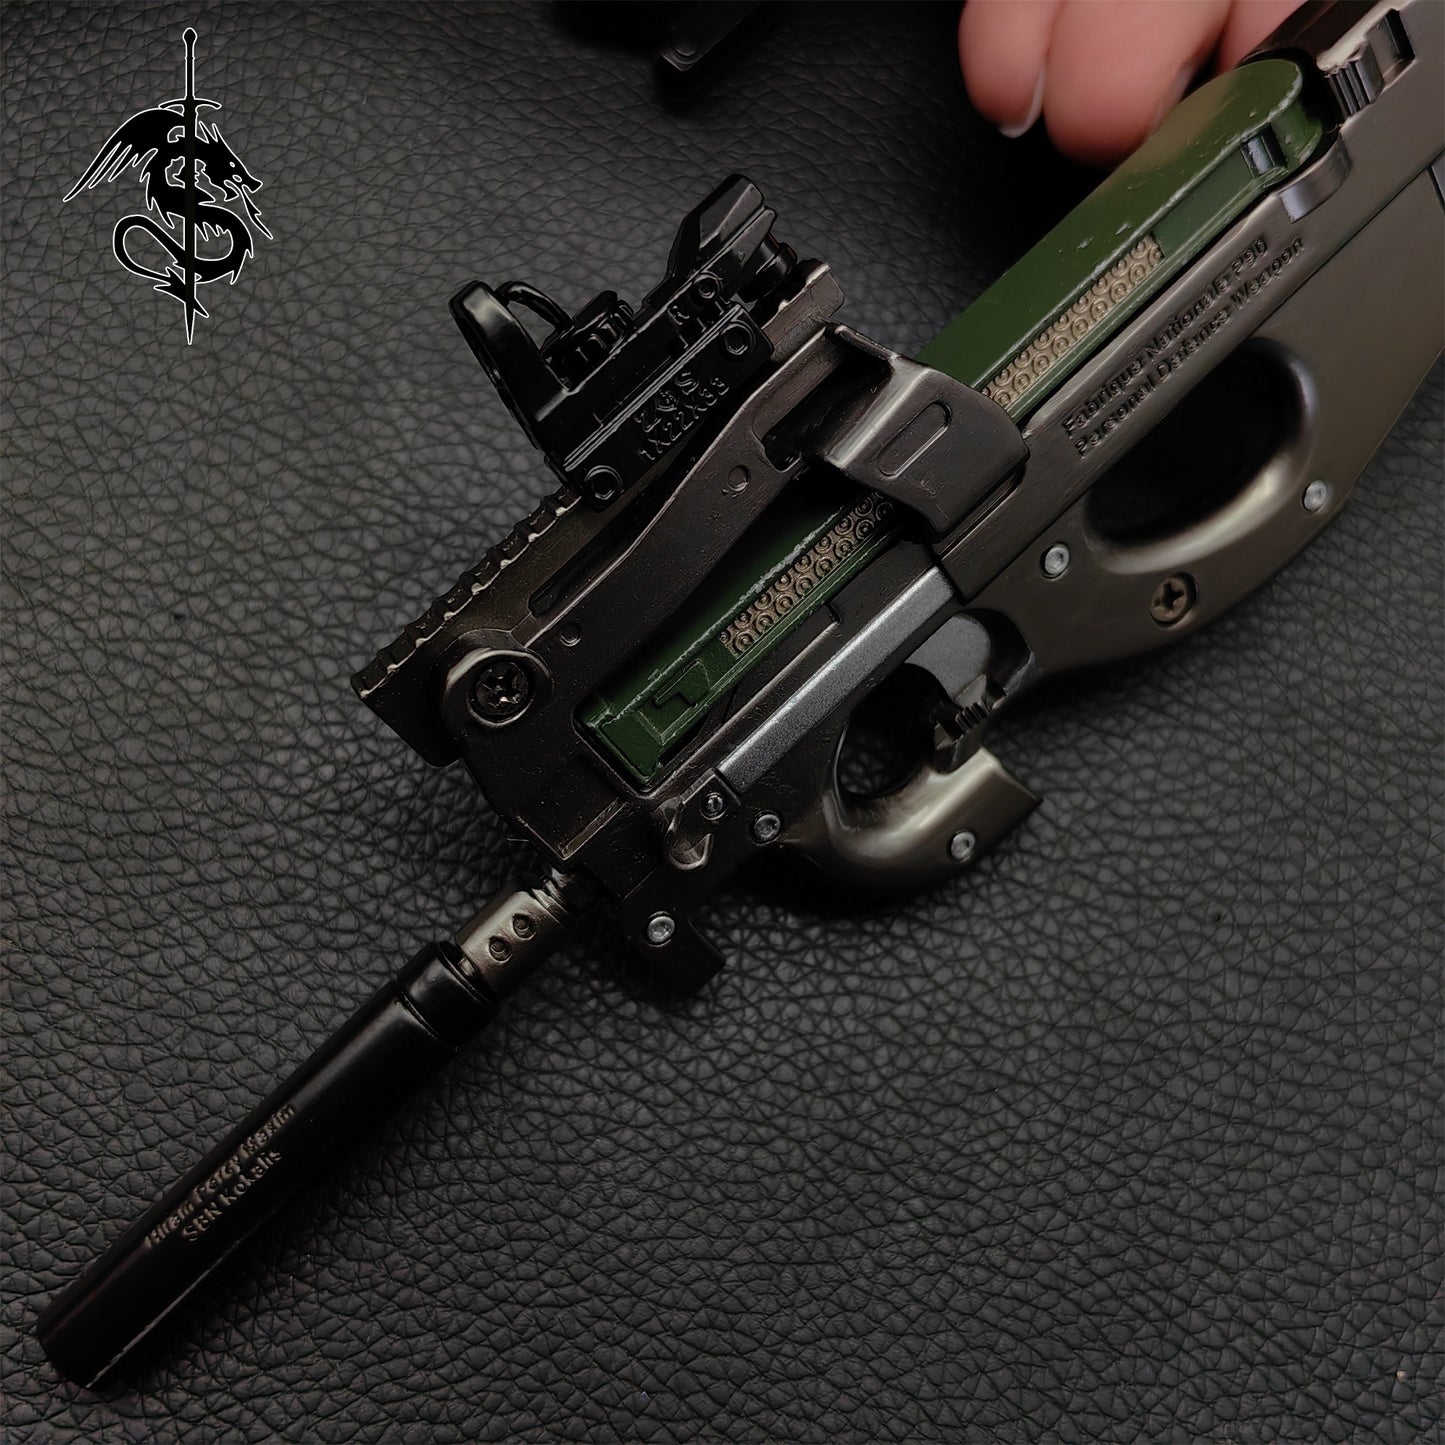 Metal P90 Submachine Gun Miniature Small P90 Tiny Gun Replica